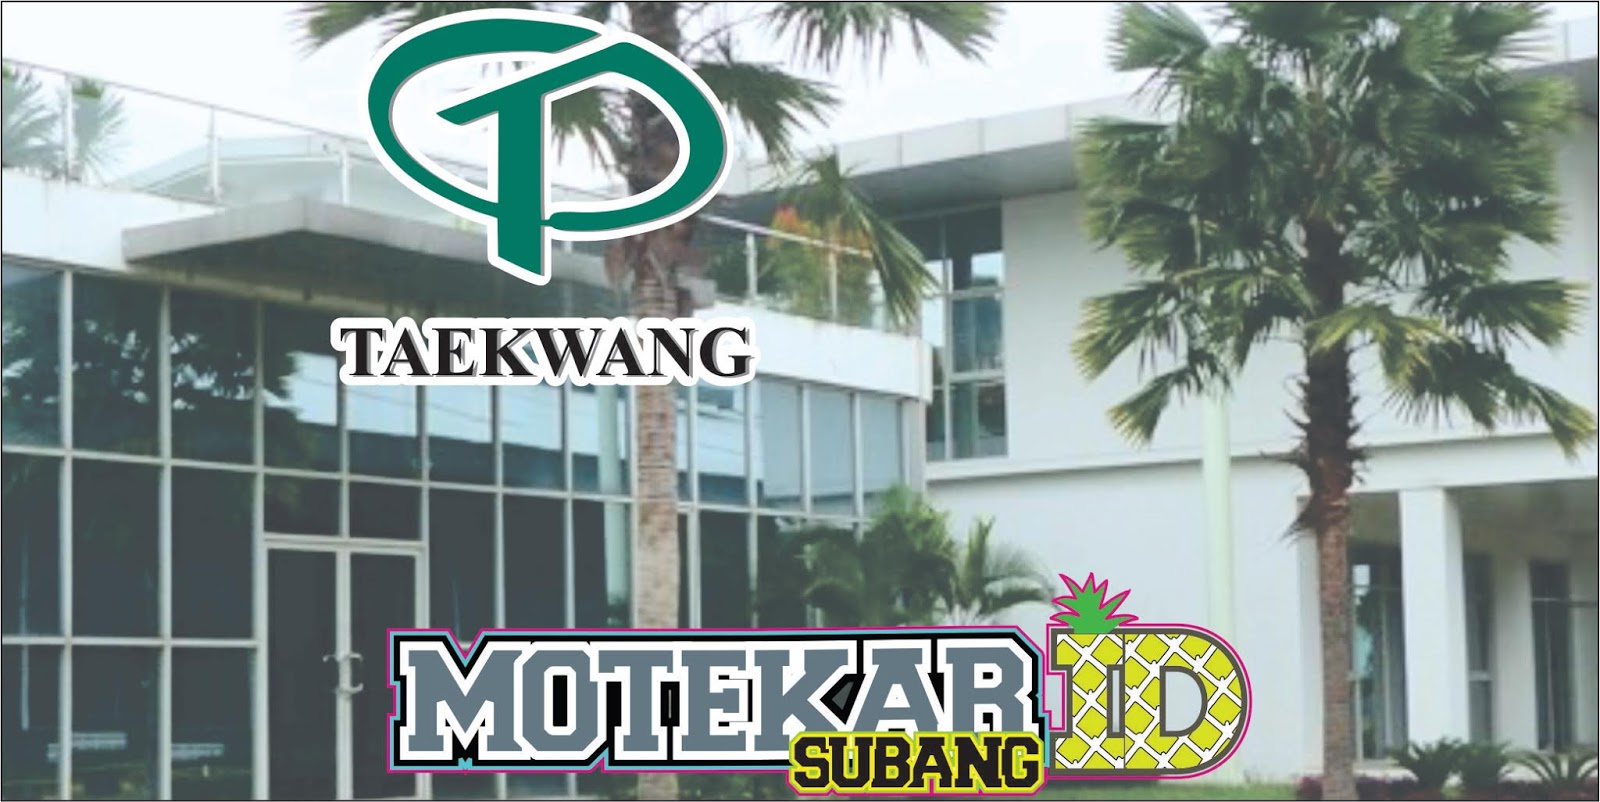 Cara Melamar PT. TK Industrial Indonesia (Taekwang) Online - Motekar Subang